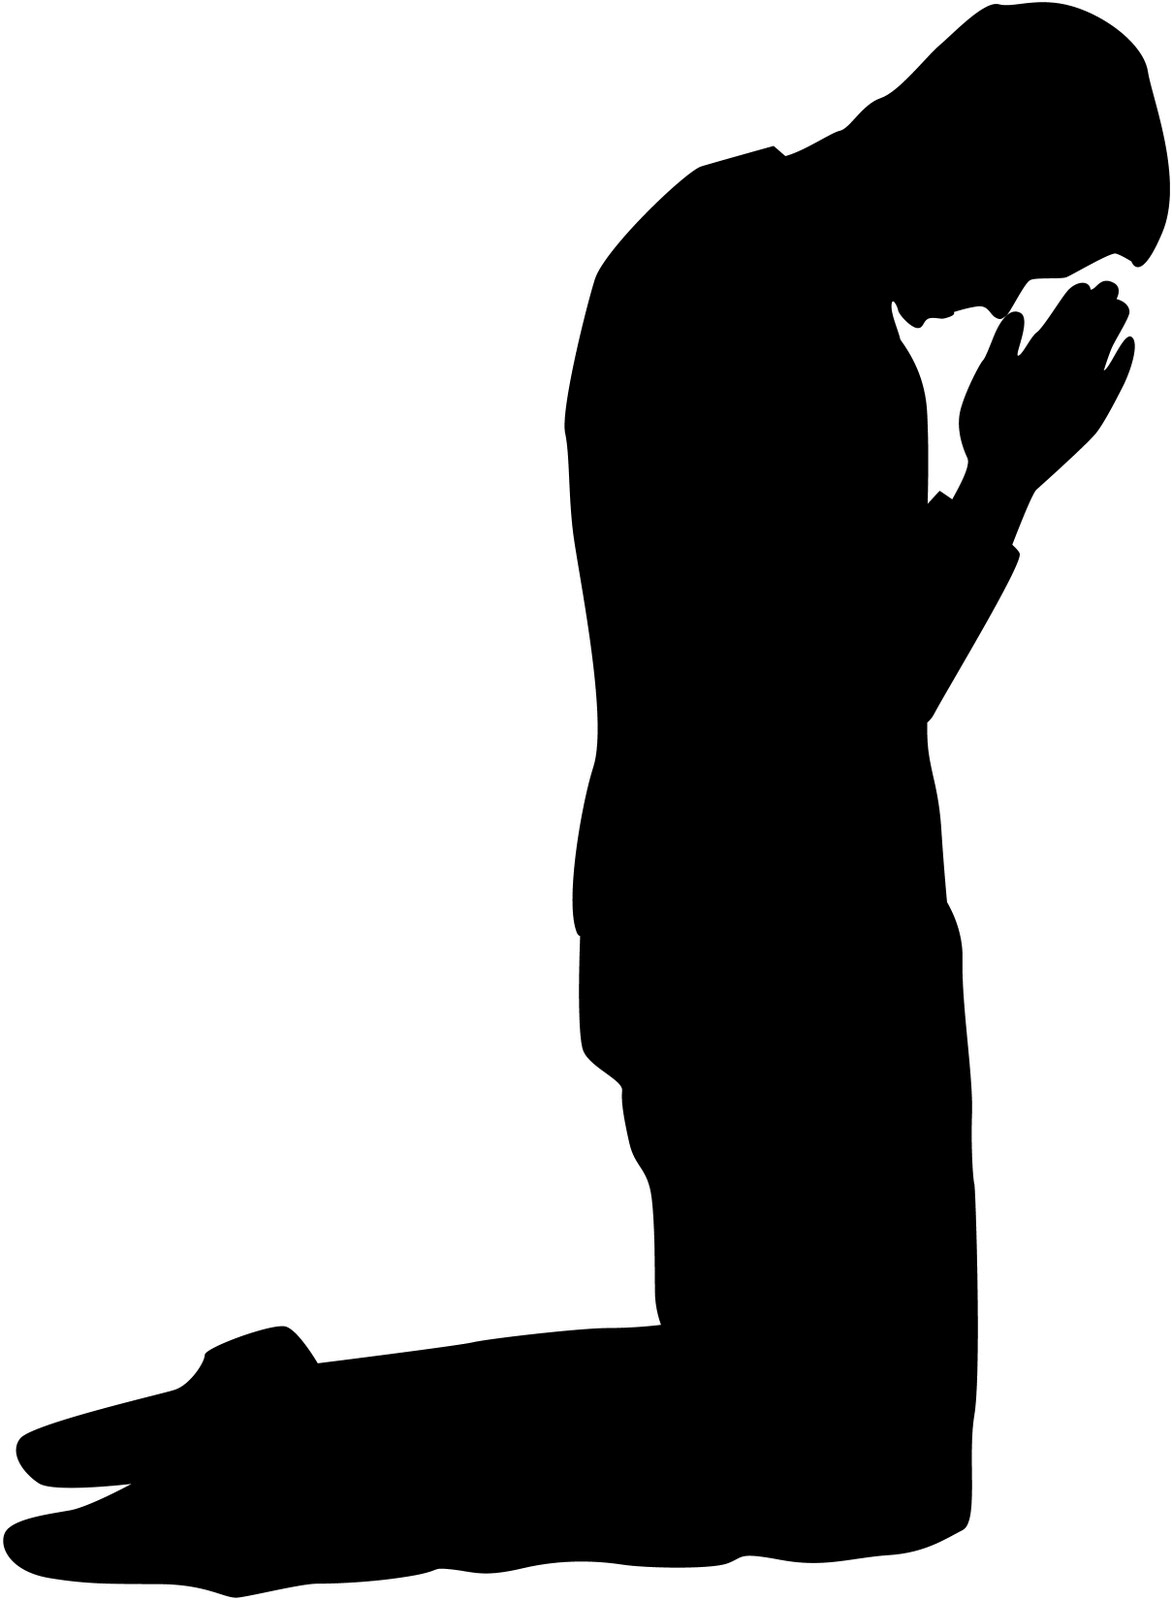 Black Woman Praying Clipart